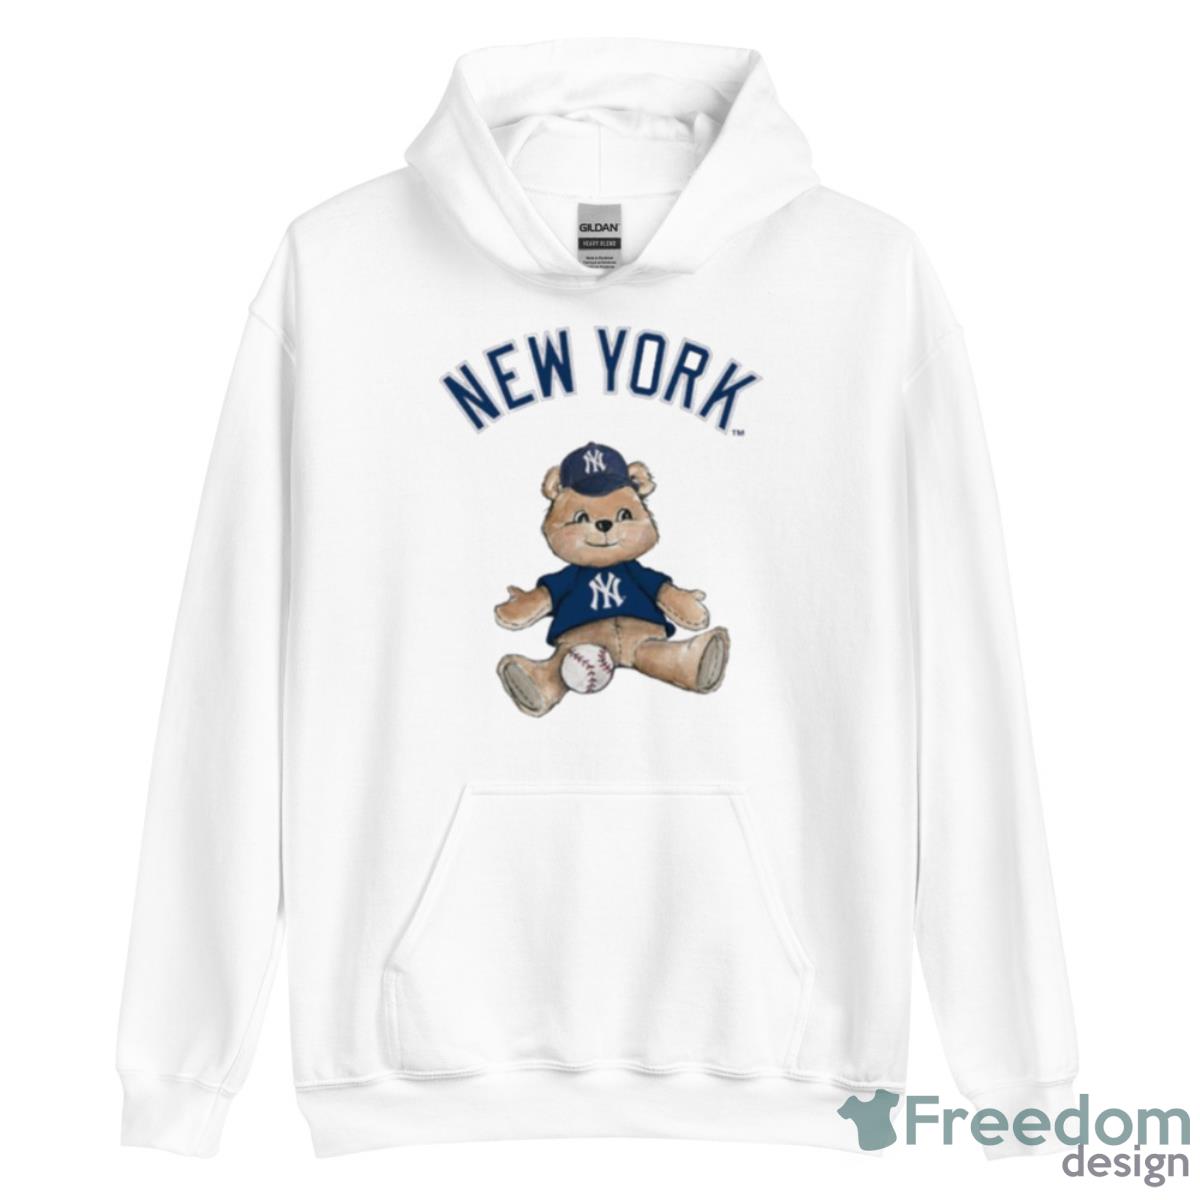 MLB New York Yankees Infant Boys' Pullover Jersey - 12M